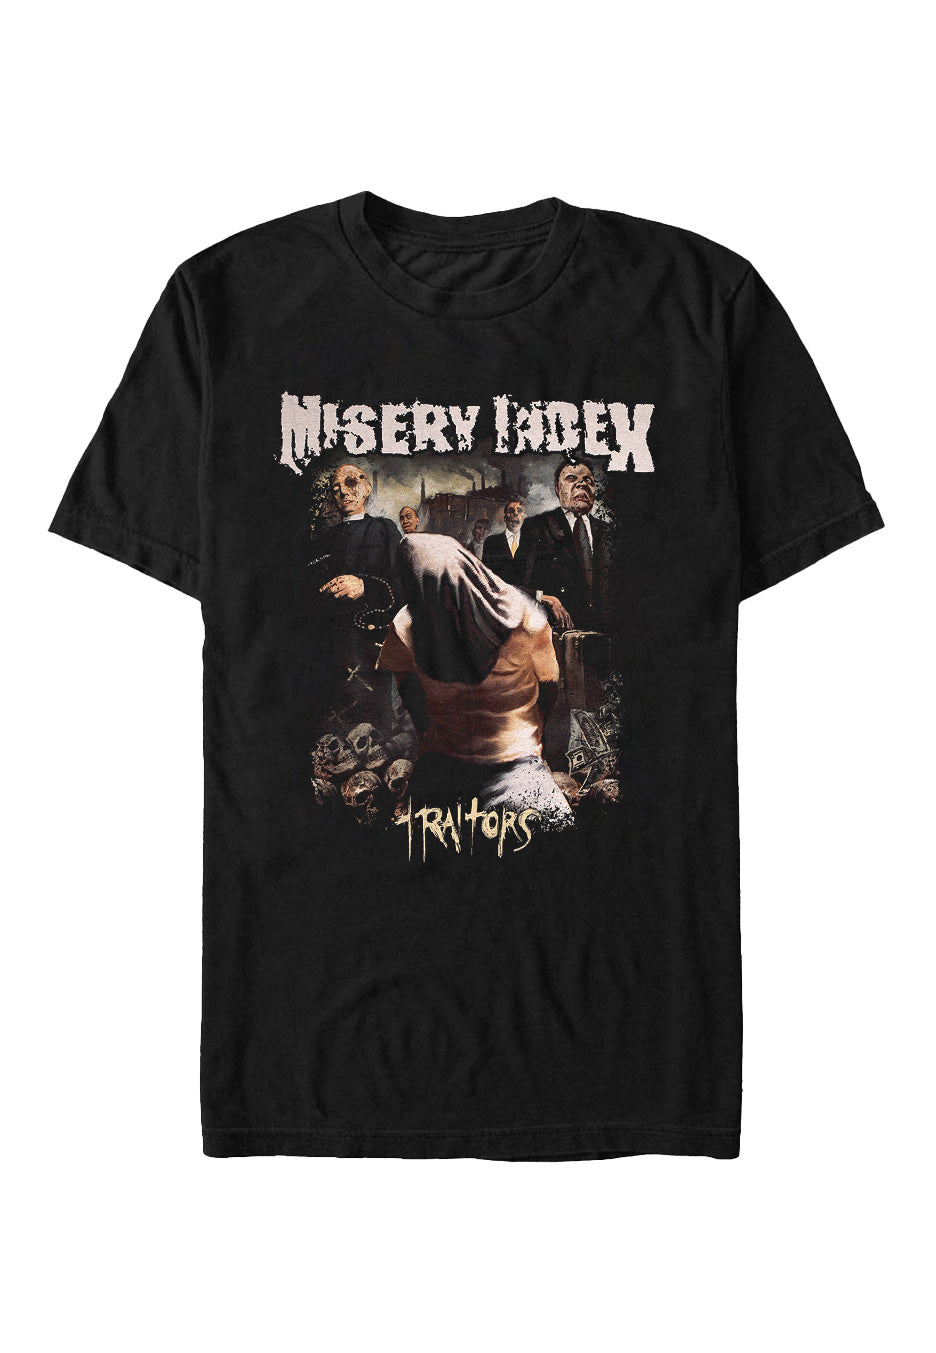 Misery Index - Traitors - T-Shirt